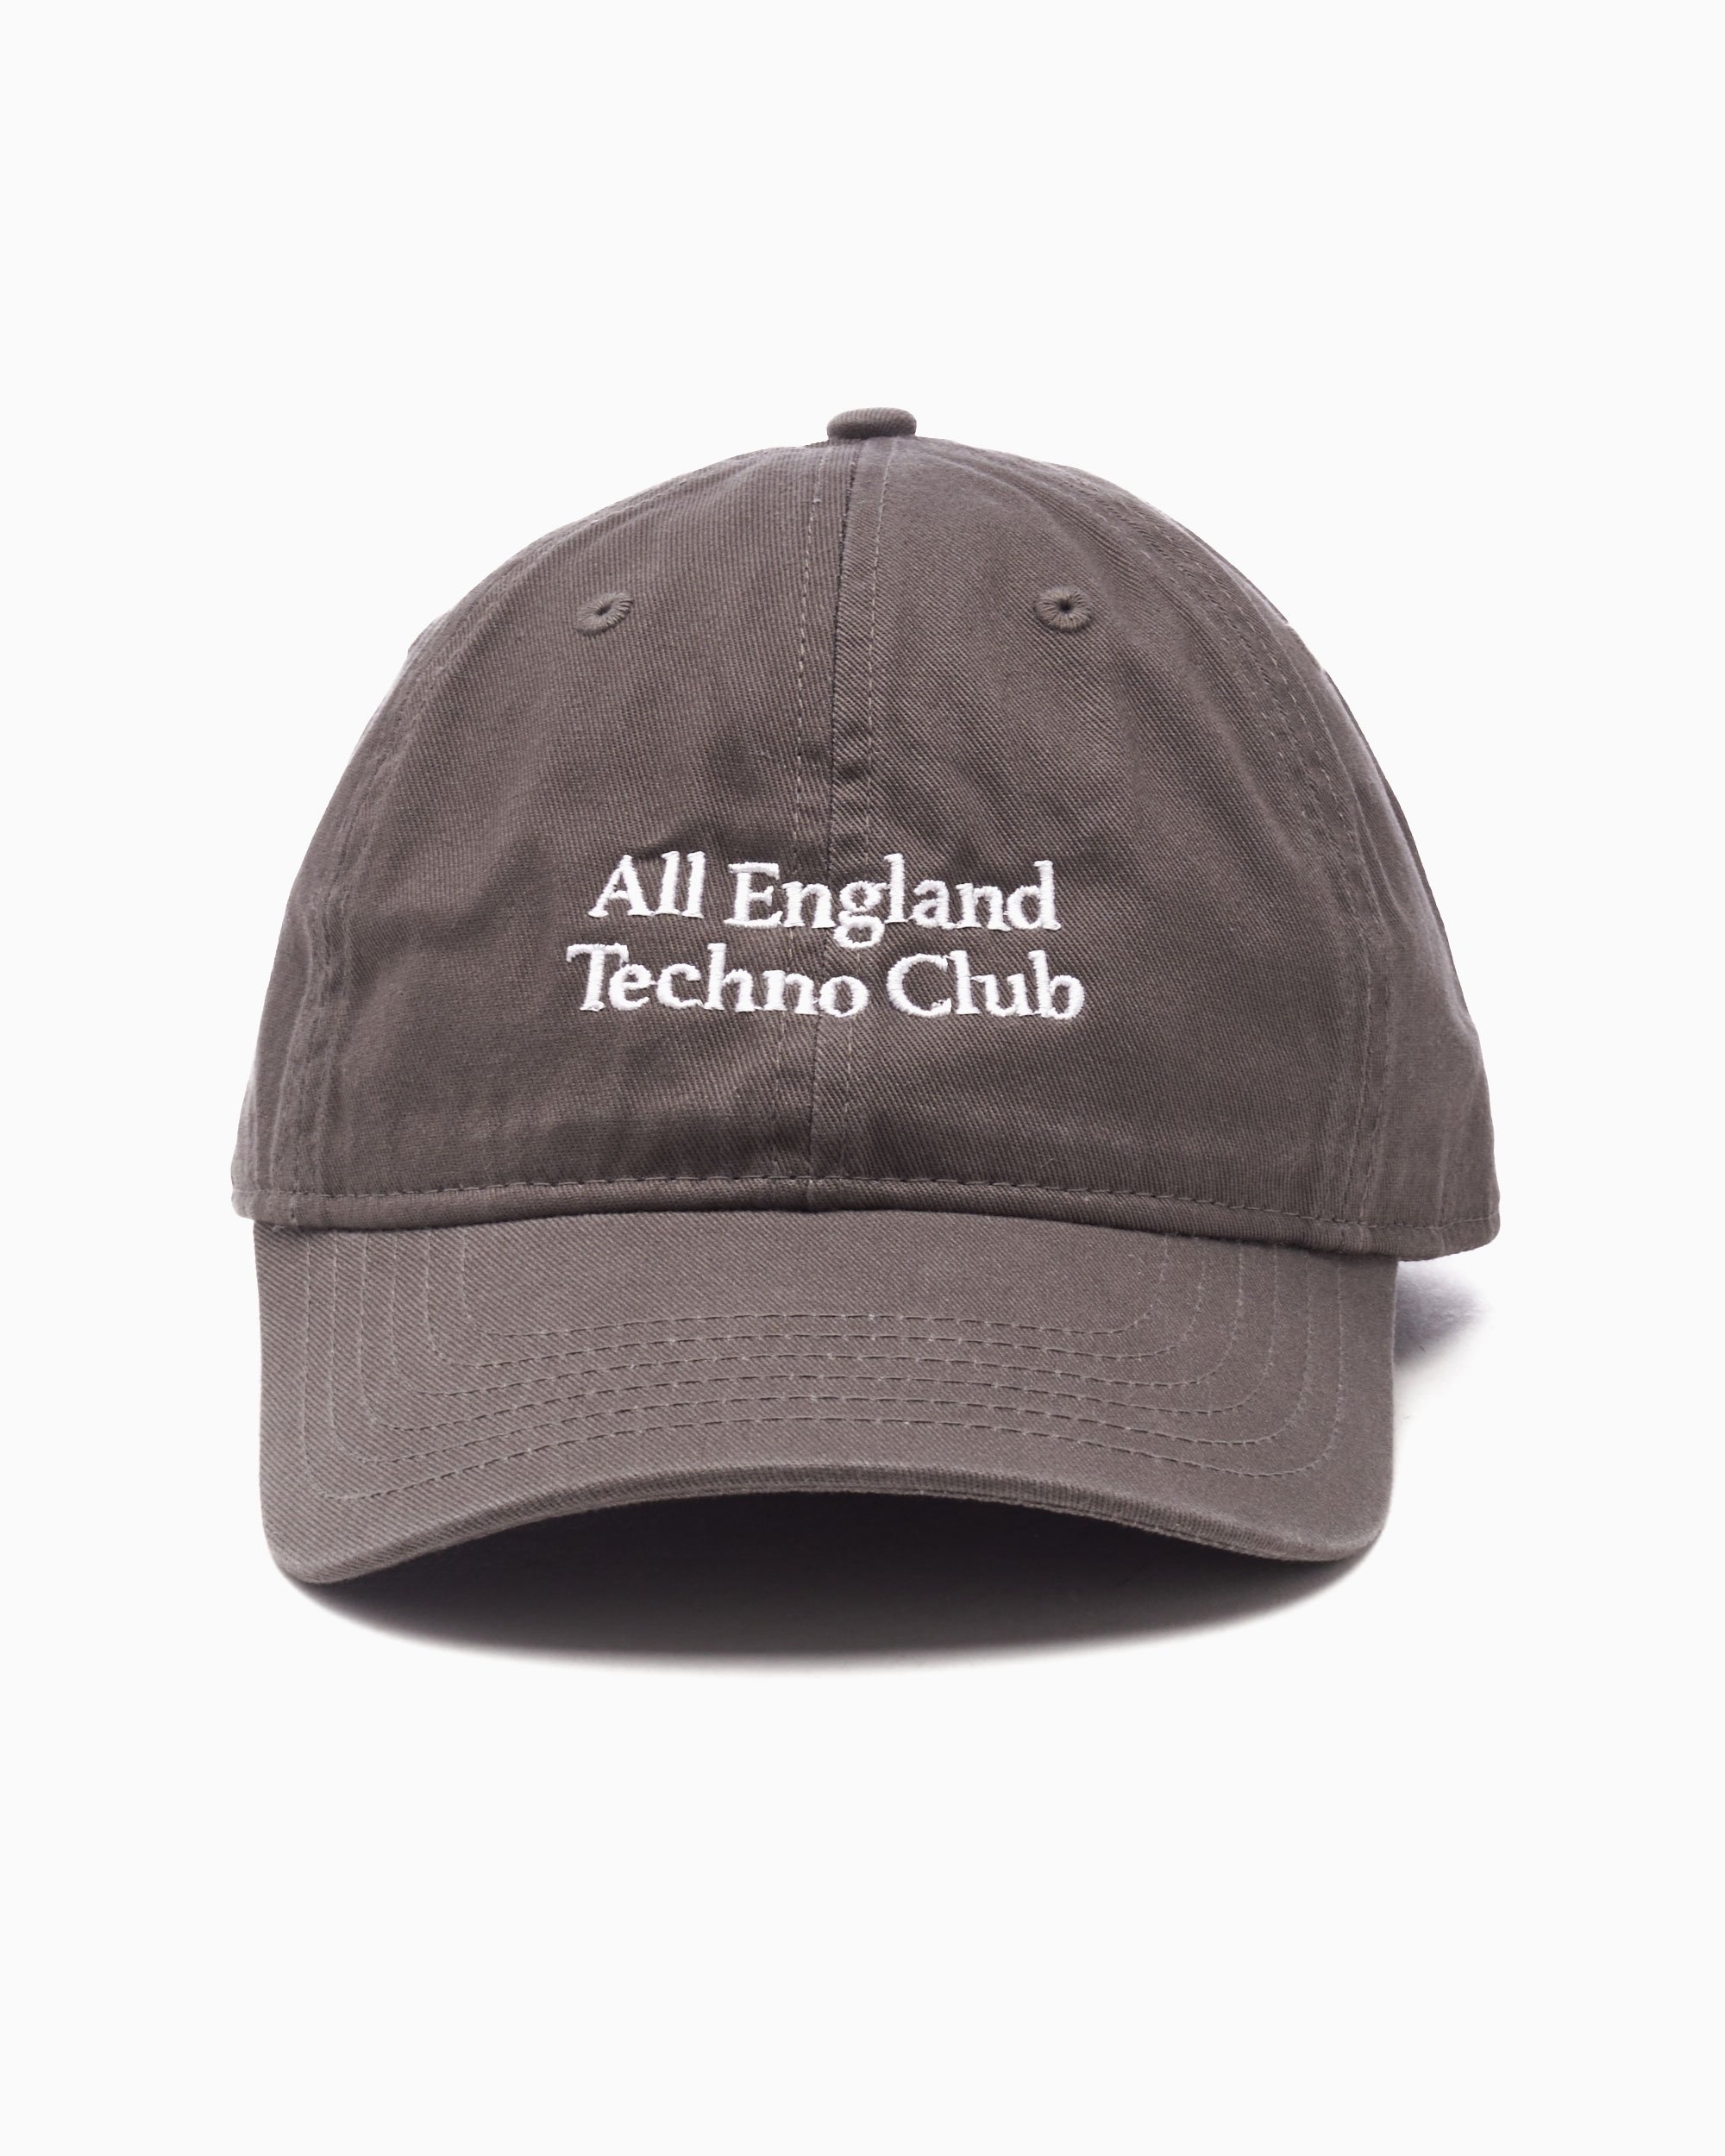 IDEAx new era  『ALL ENGLAND TECHNO CLUB』